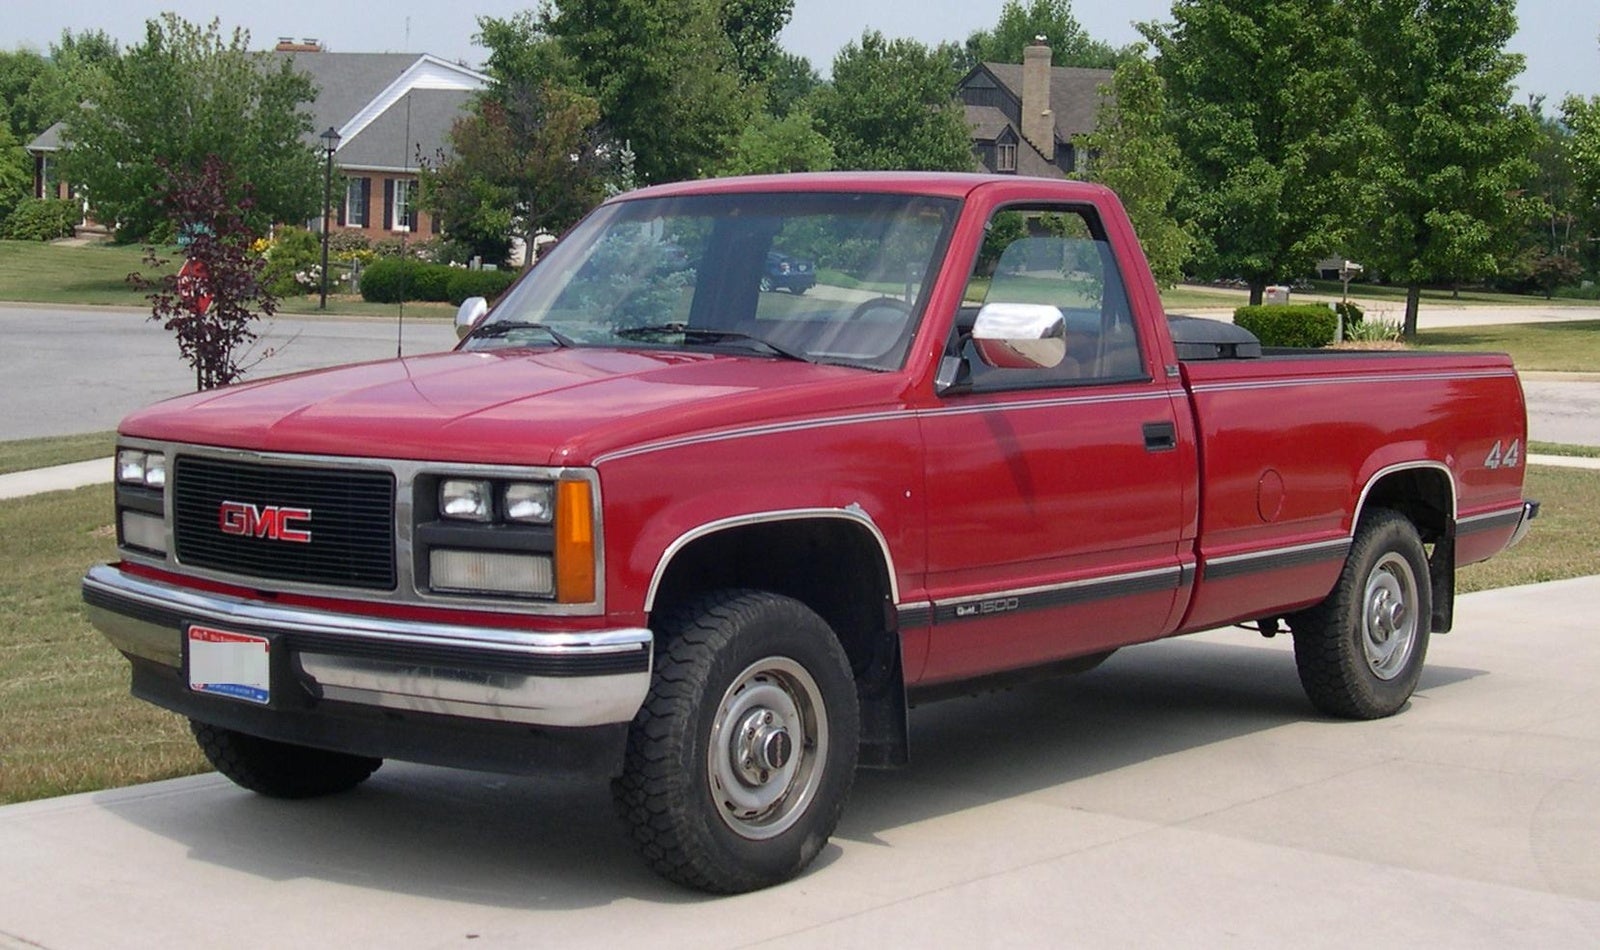 1990 Gmc pickup trucks #1